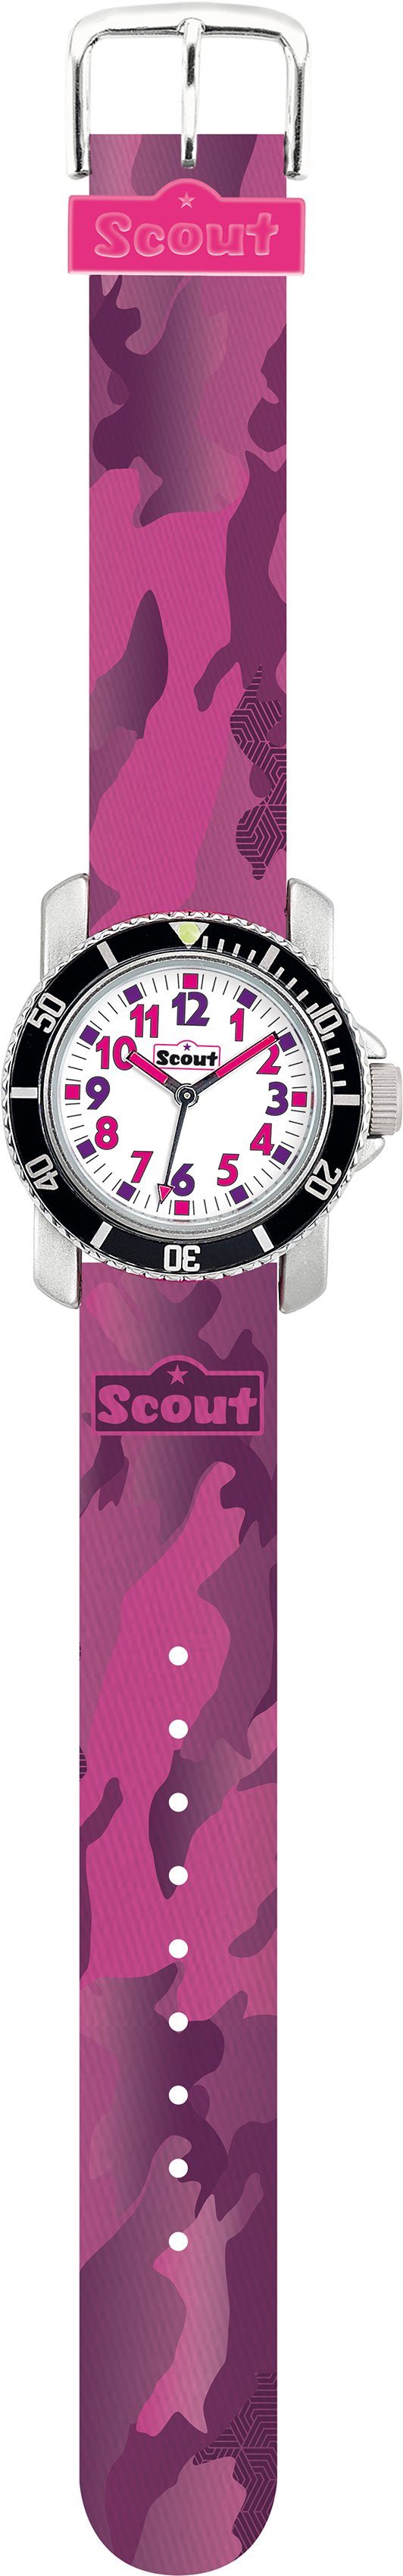 Scout Quarzuhr Diver, 280377004, Geschenk ideal auch als